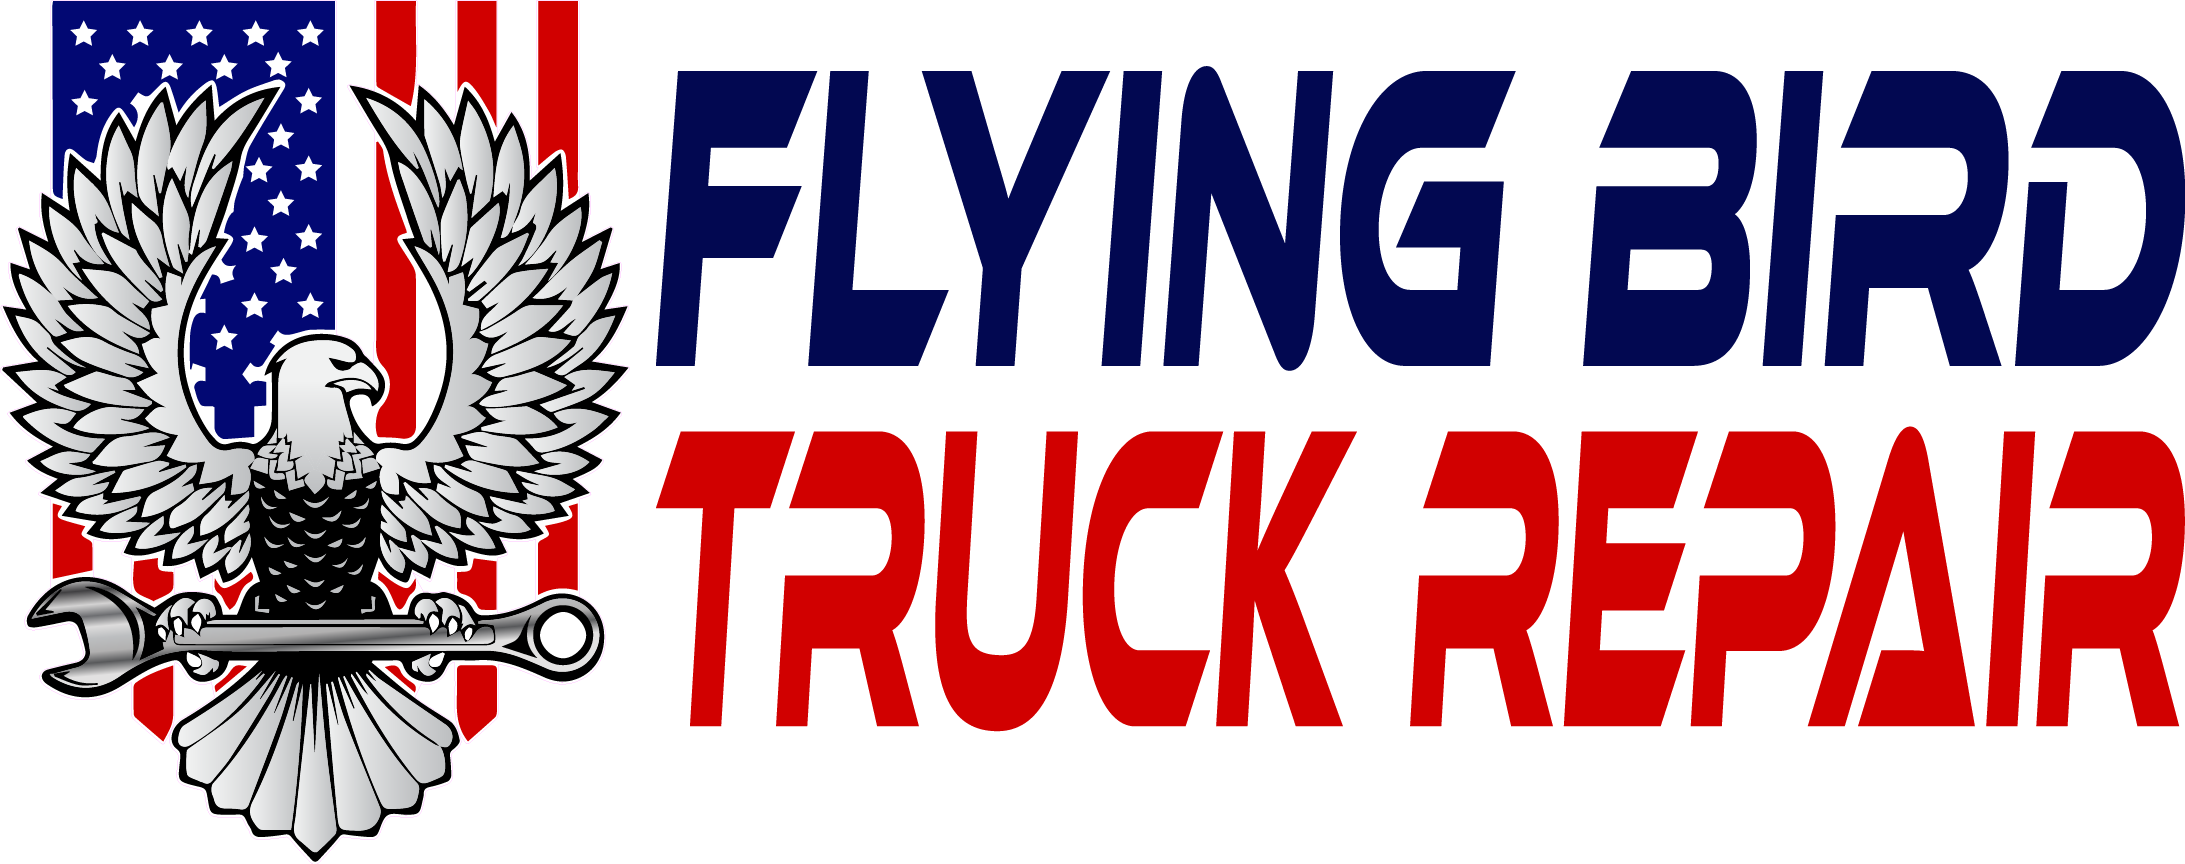 Tire Alignment Service near Me| Flying Bird Truck Repair